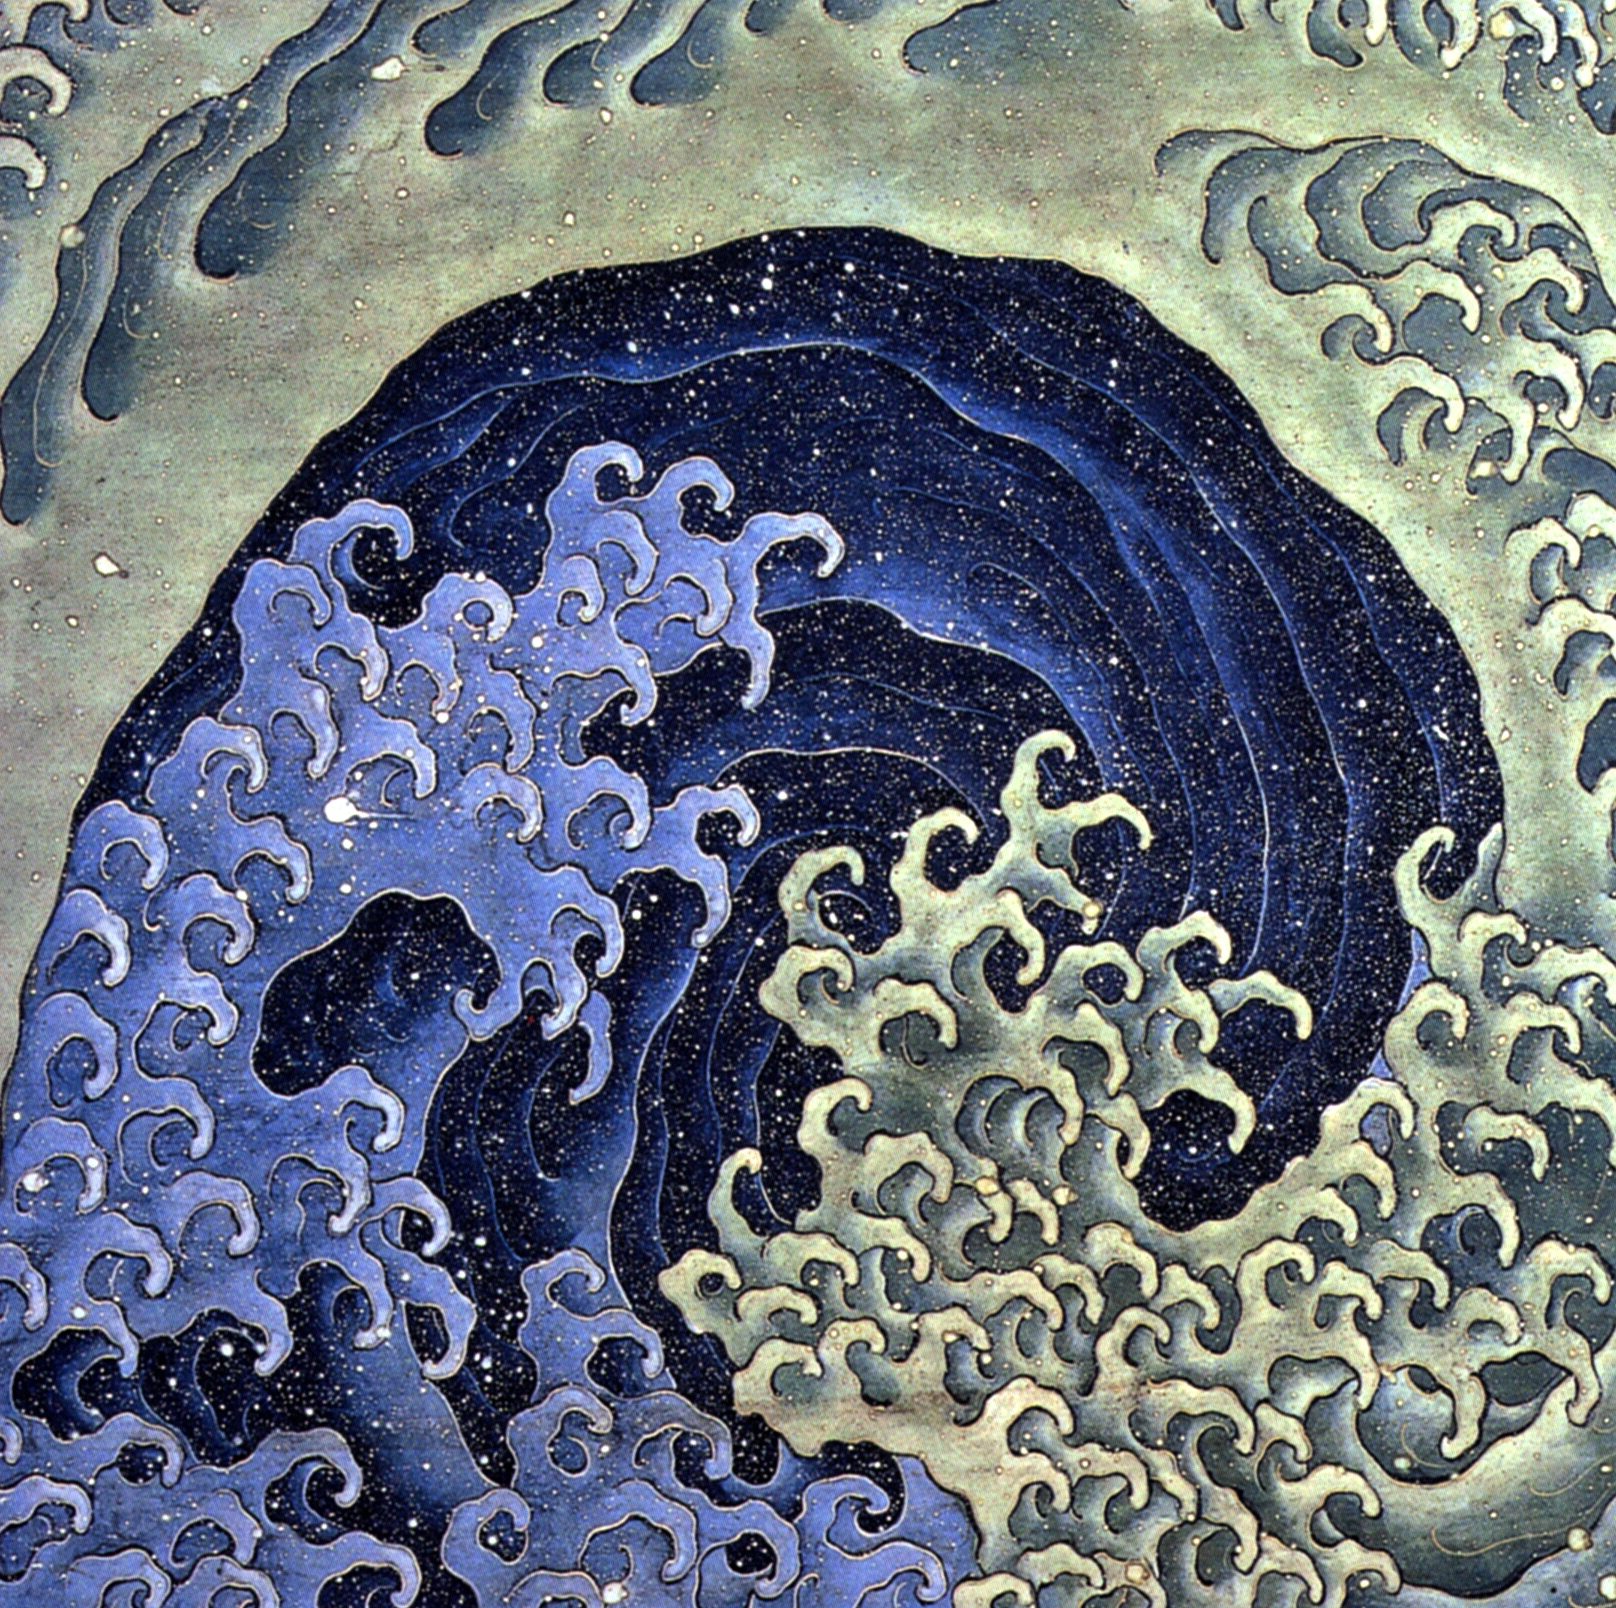 Ola femenina by Katsushika Hokusai - 1845 - 118 x 118,5 cm 